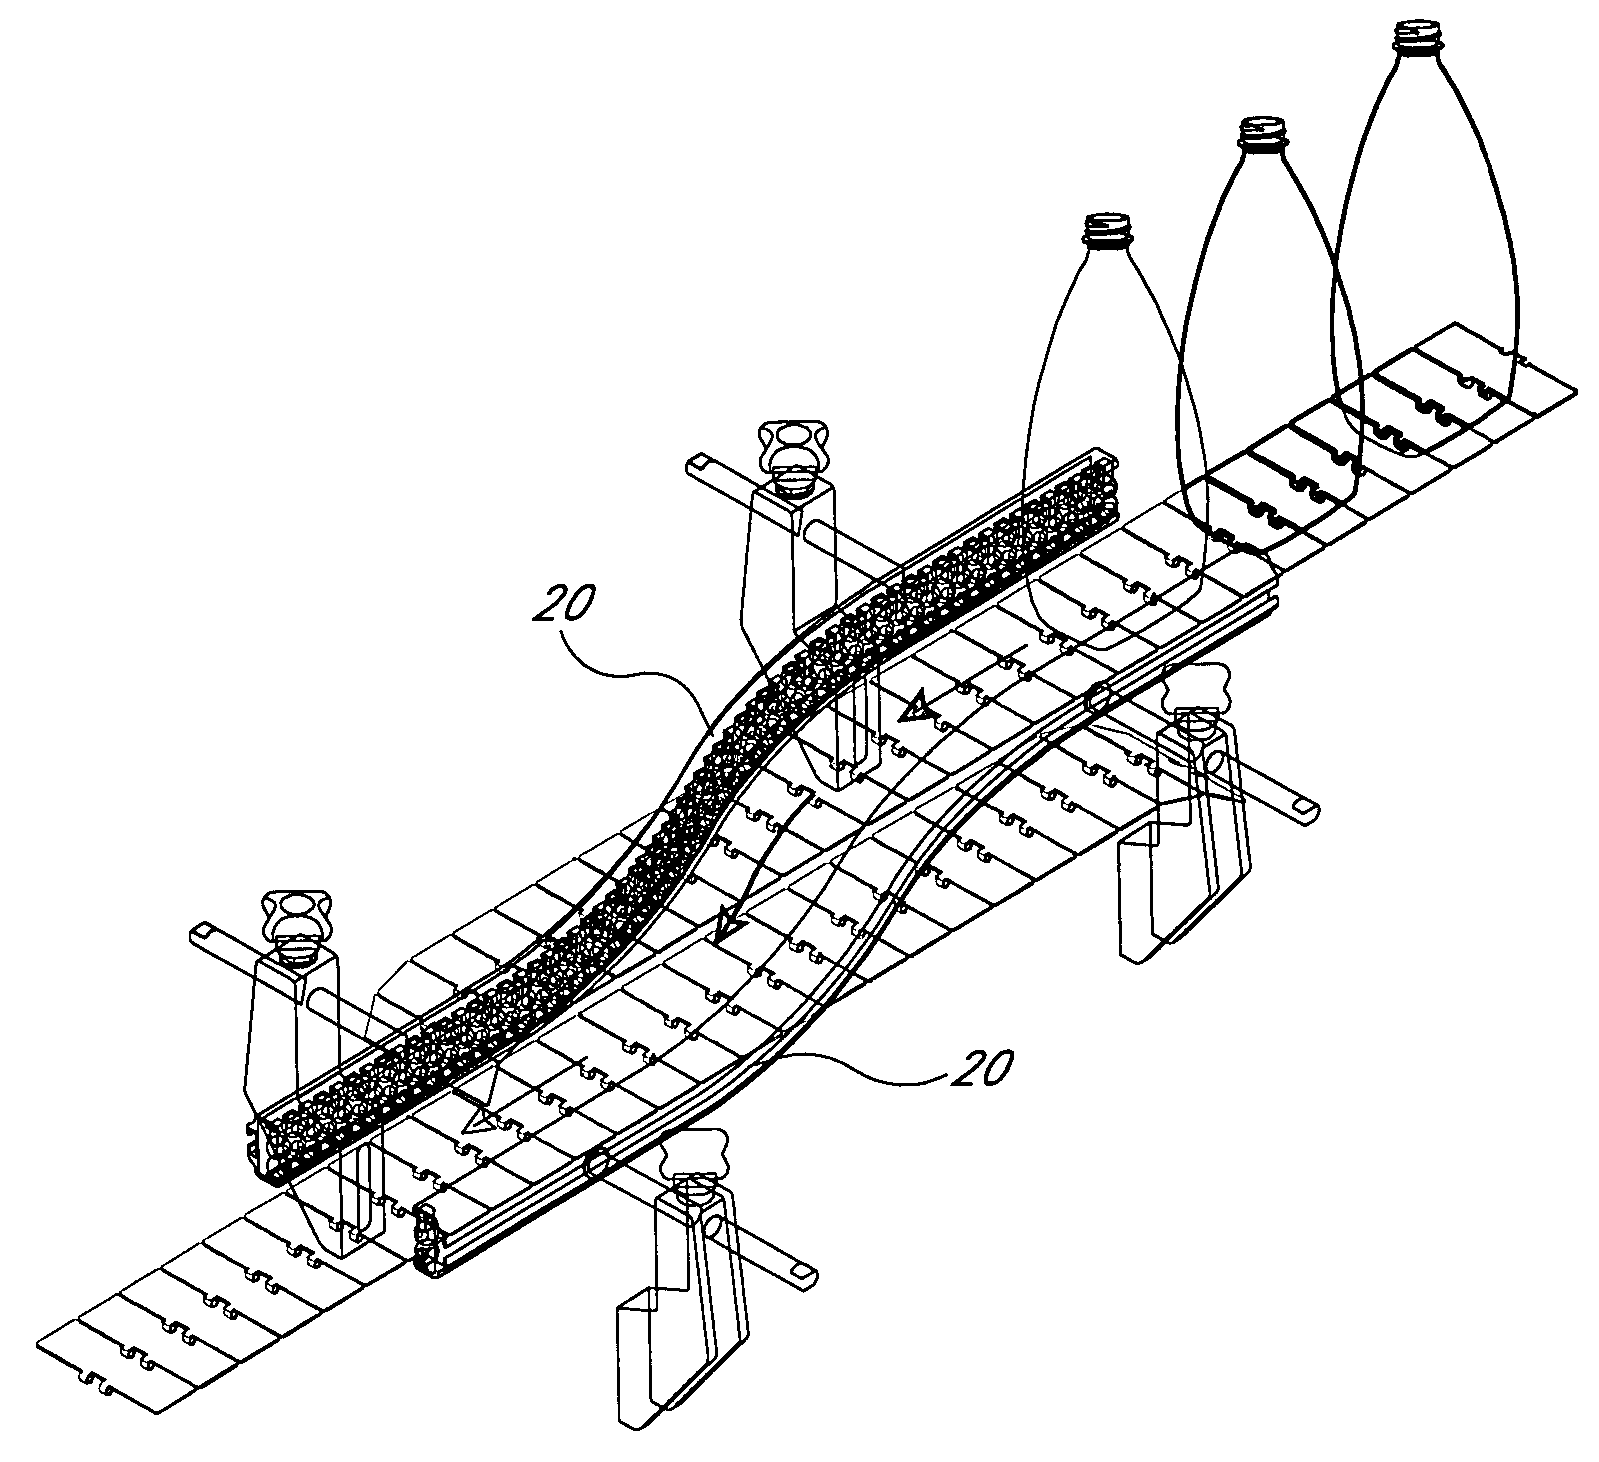 Bendable/twistable rolling conveyor guide